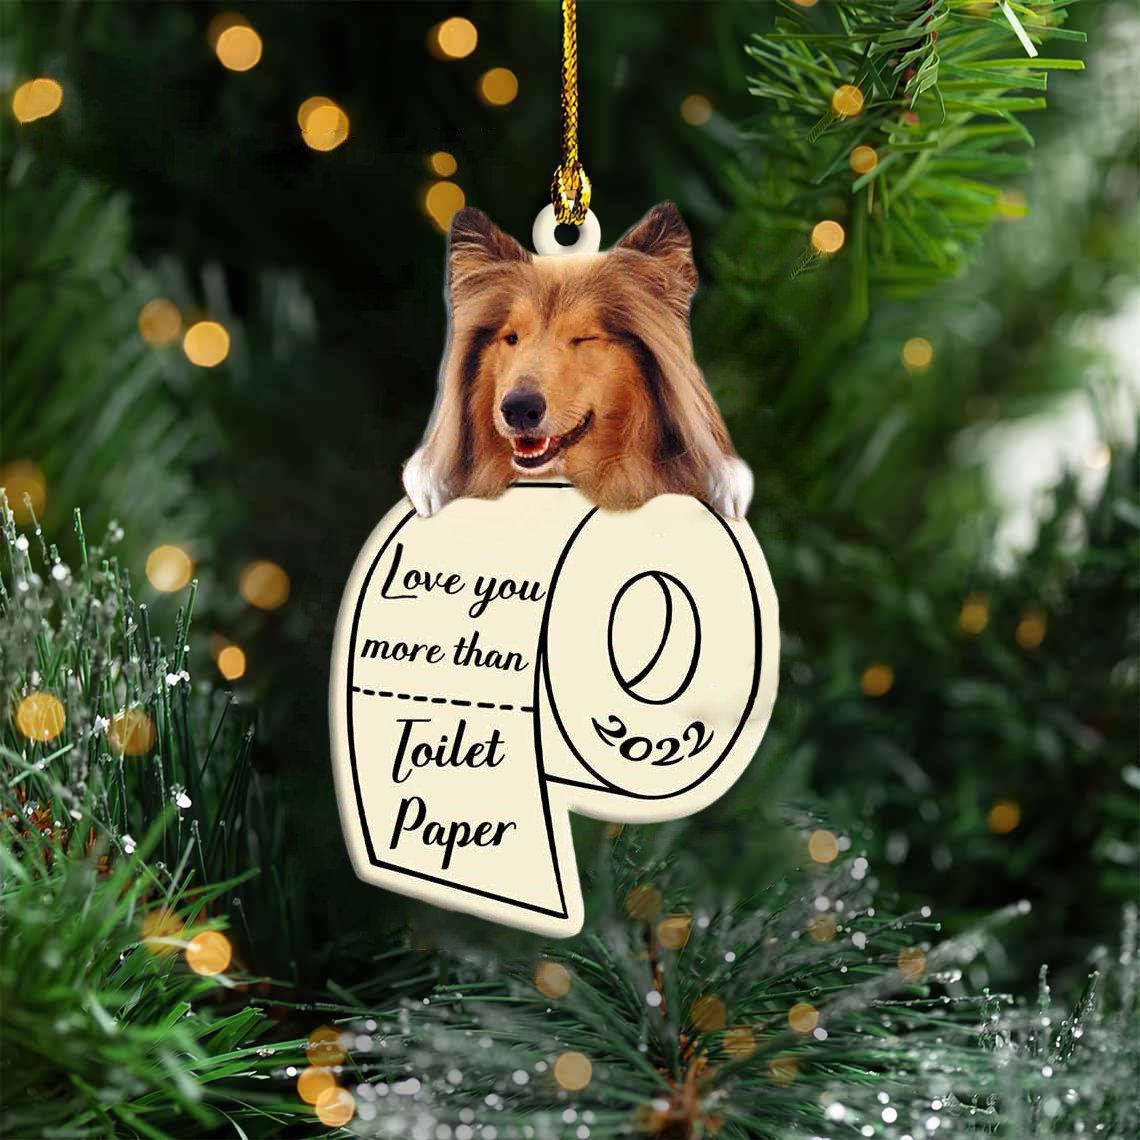 Shetland Sheepdog Love You More Than Toilet Paper 2022 Hanging Ornament